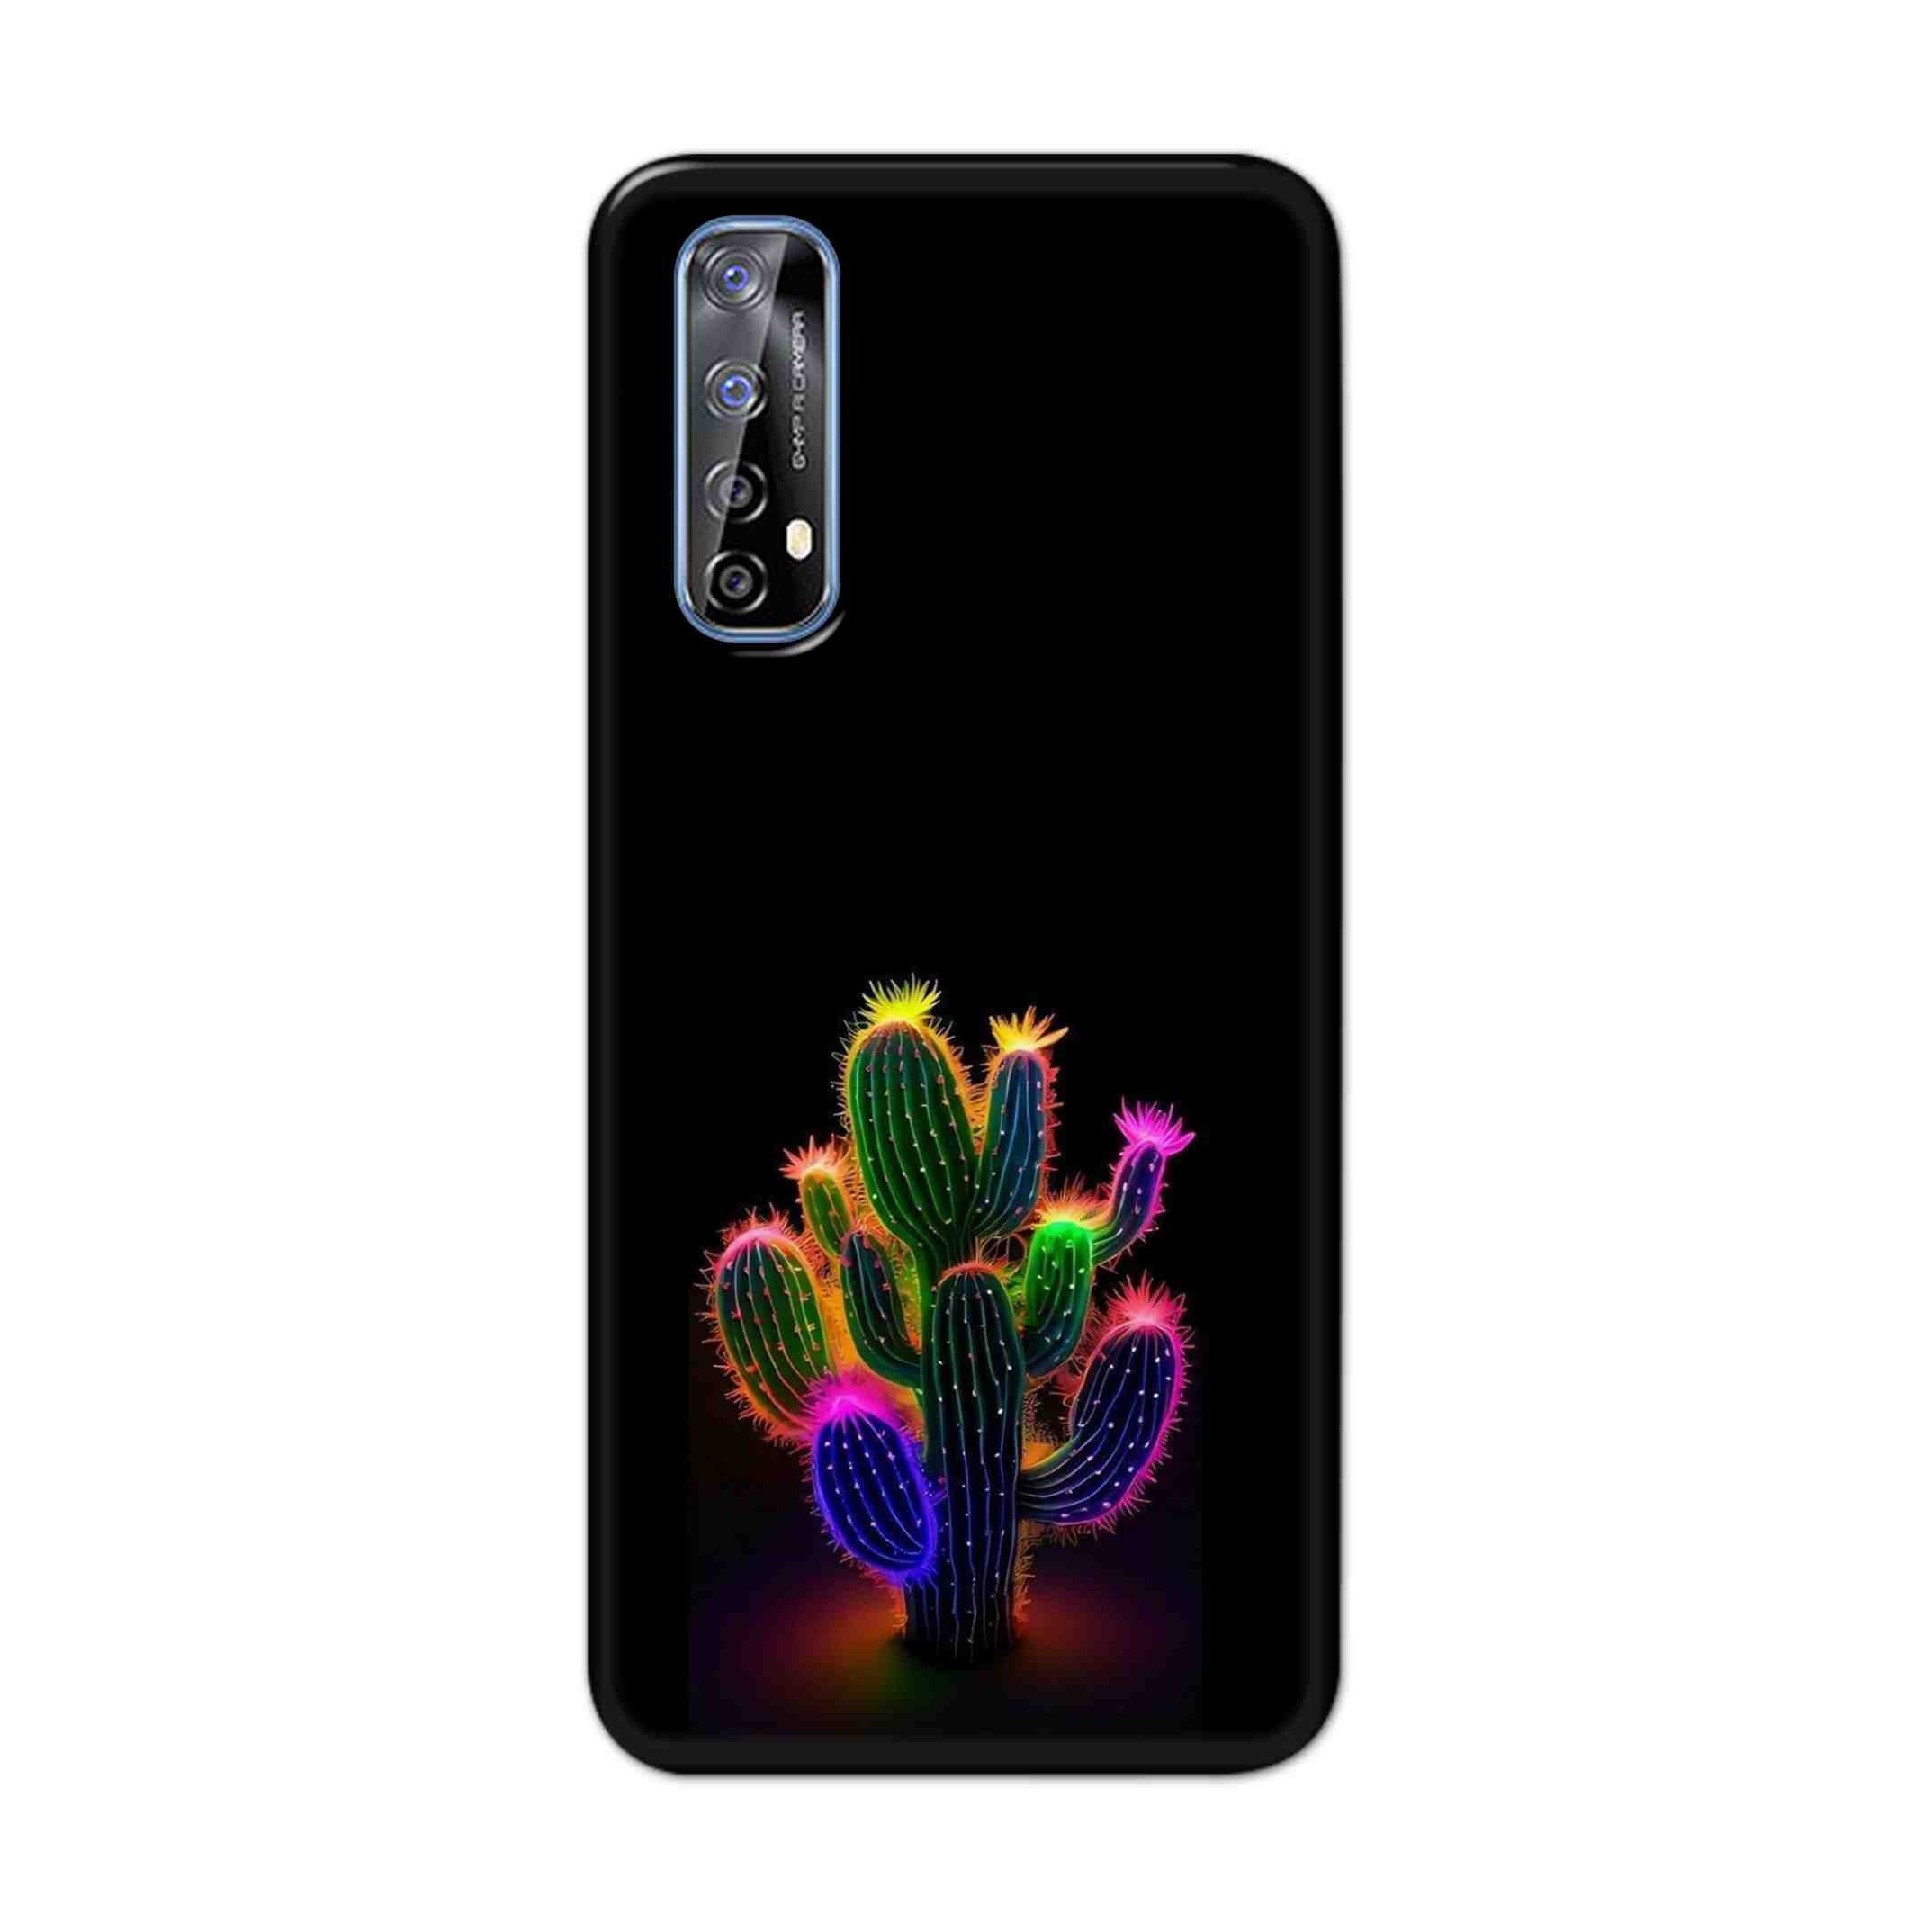 Buy Neon Flower Hard Back Mobile Phone Case Cover For Realme 7 Online